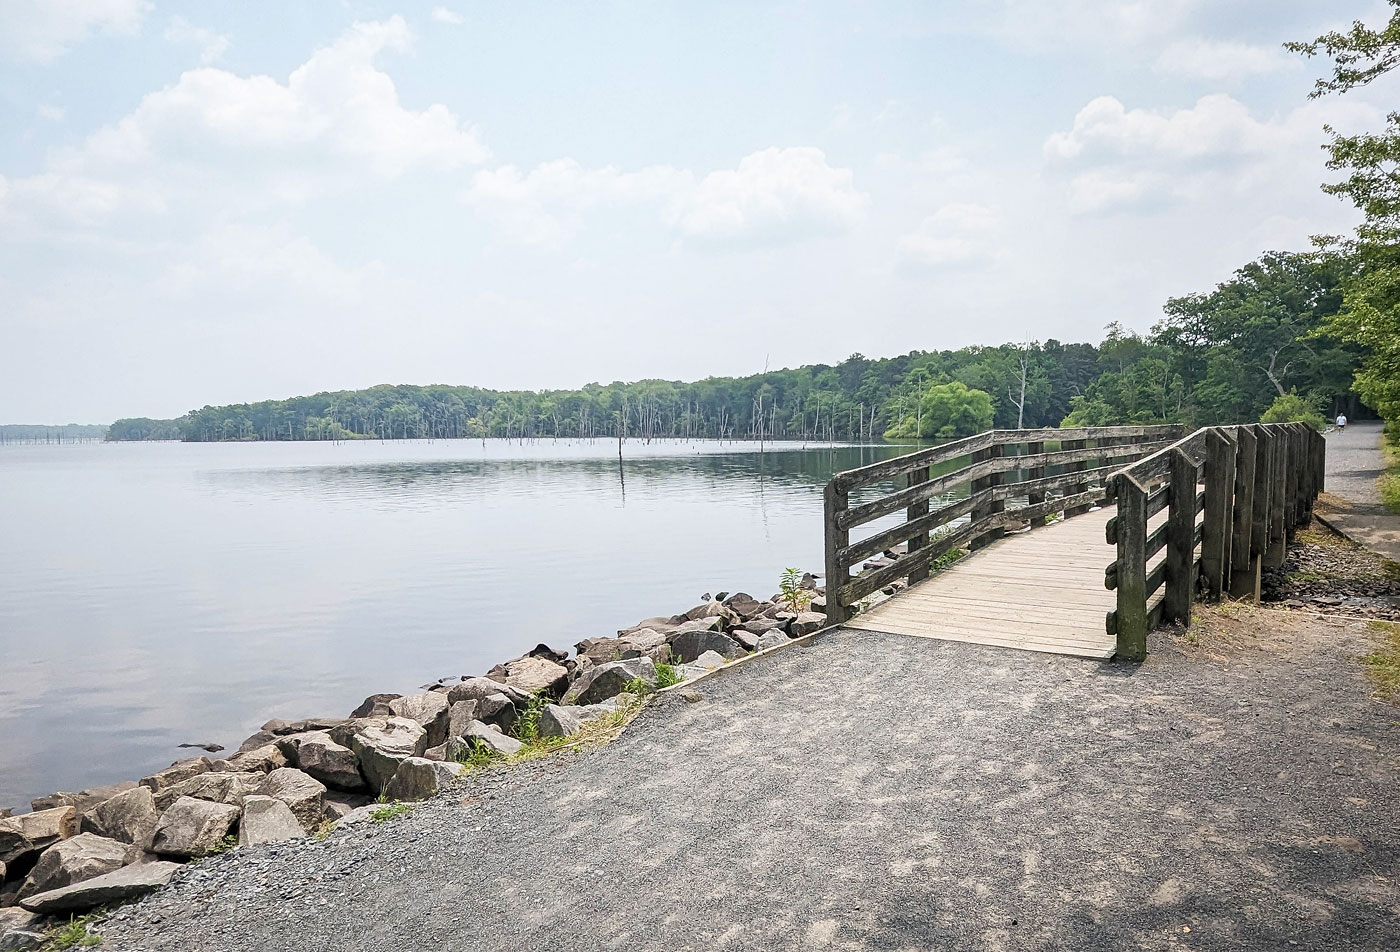 Hike Manasquan Reservoir Perimeter Trail in Manasquan Reservoir County Park, New Jersey - Stav is Lost